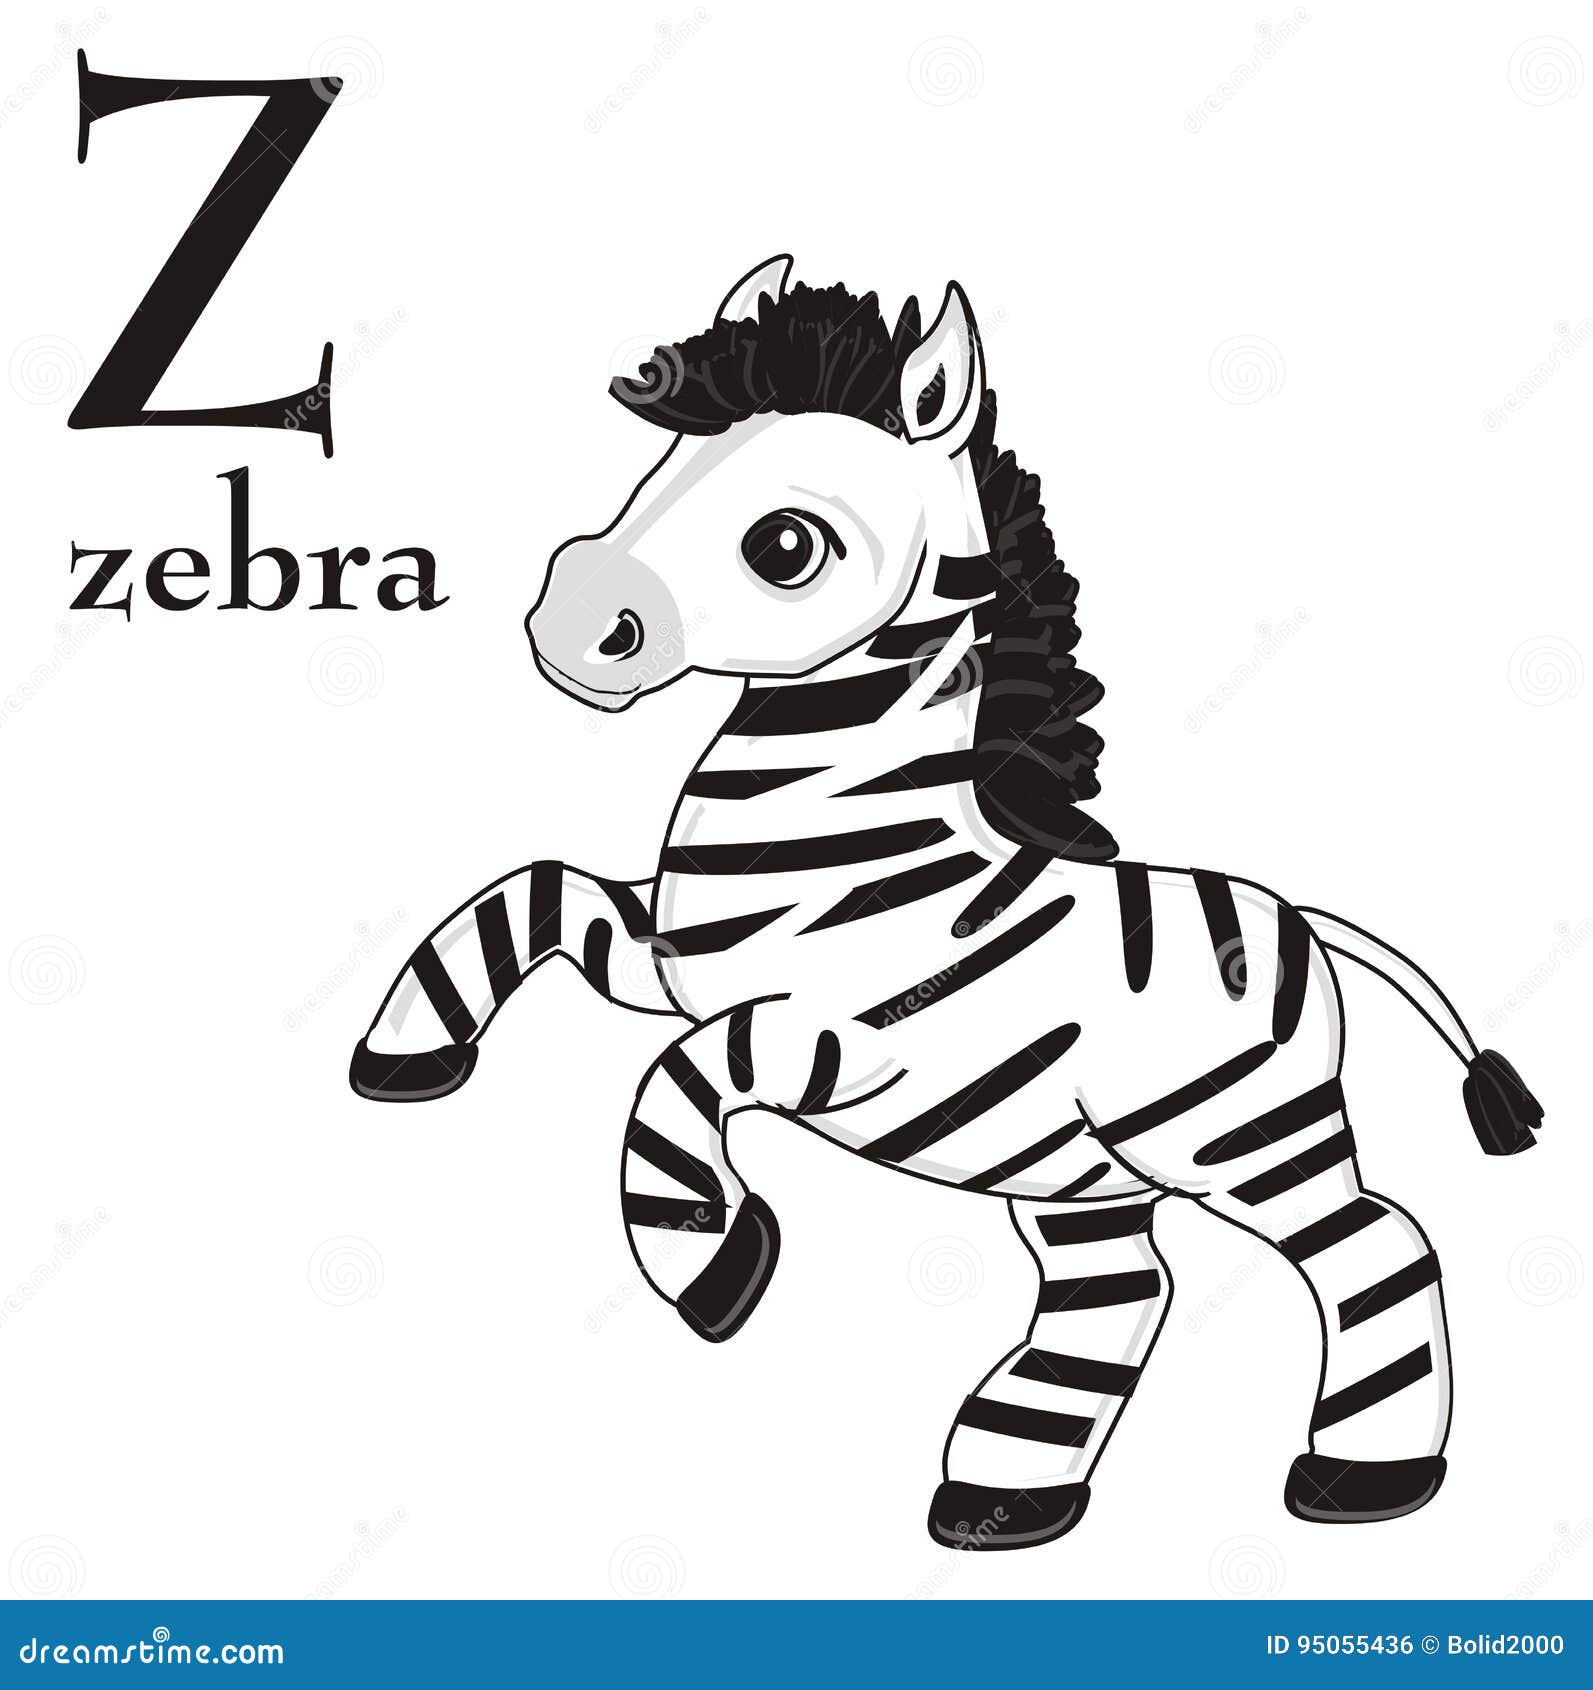 Z Zebra. Точечный рисунок Зебра. Аппликация из ткани Зебра шаблон. Английский буква z Zebra раскраска. Зебра аудио